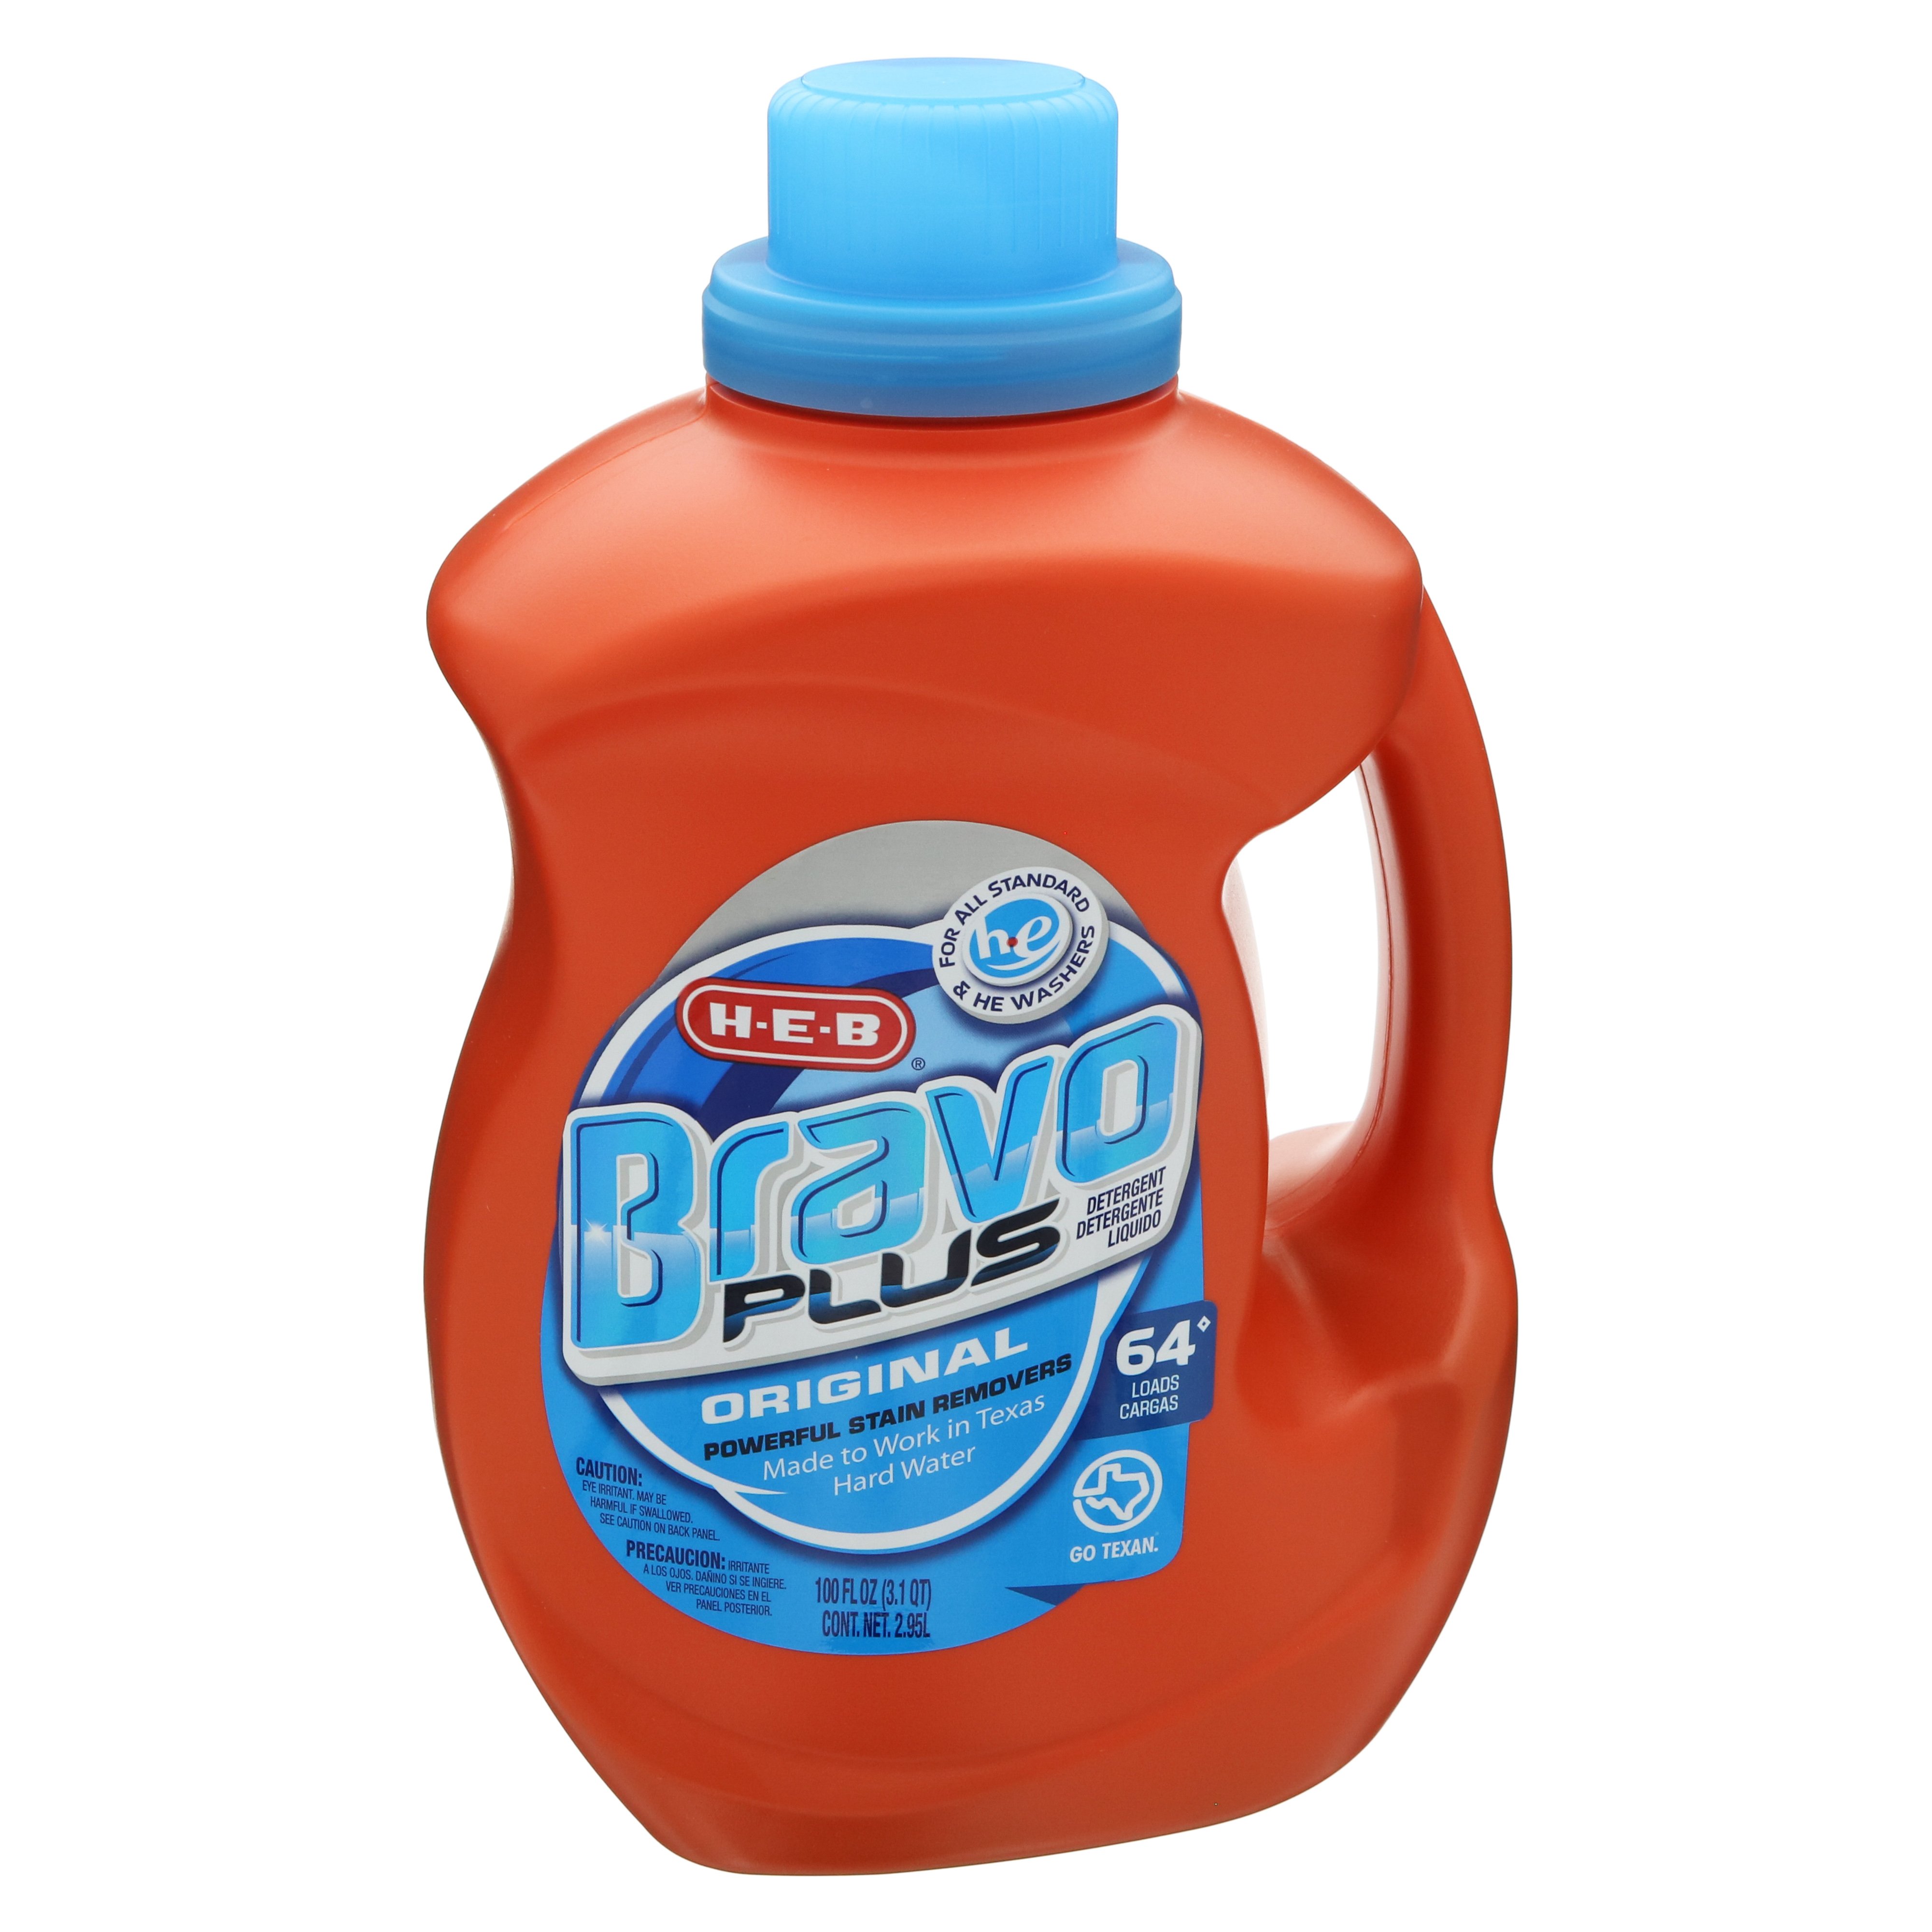 H E B Bravo Plus Original He Liquid Laundry Detergent 64 Loads Shop Detergent At H E B